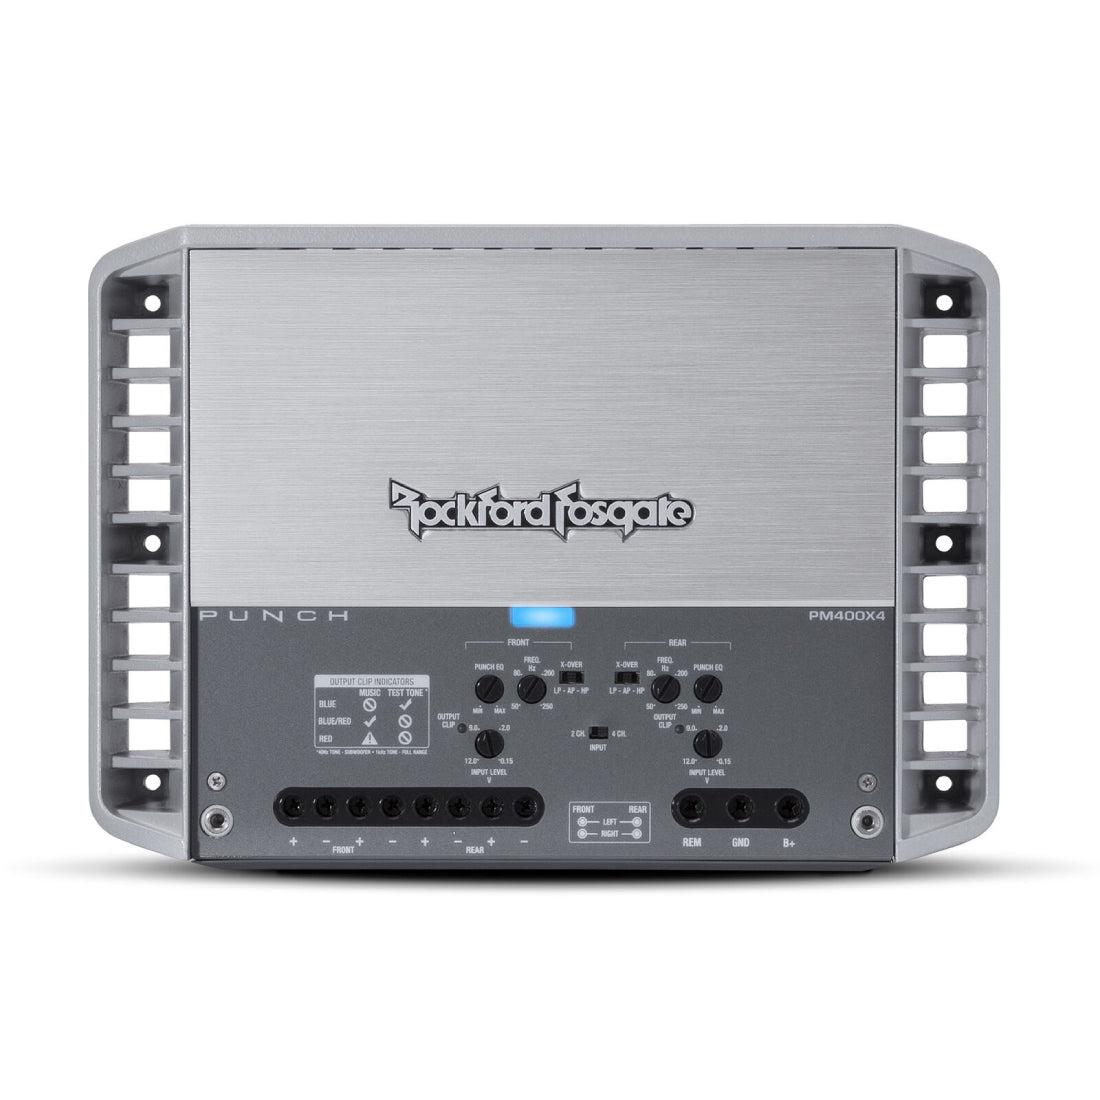 Rockford Fosgate PM400X4 400W Max 4-Channel Class-A/B Marine Audio Amplifier